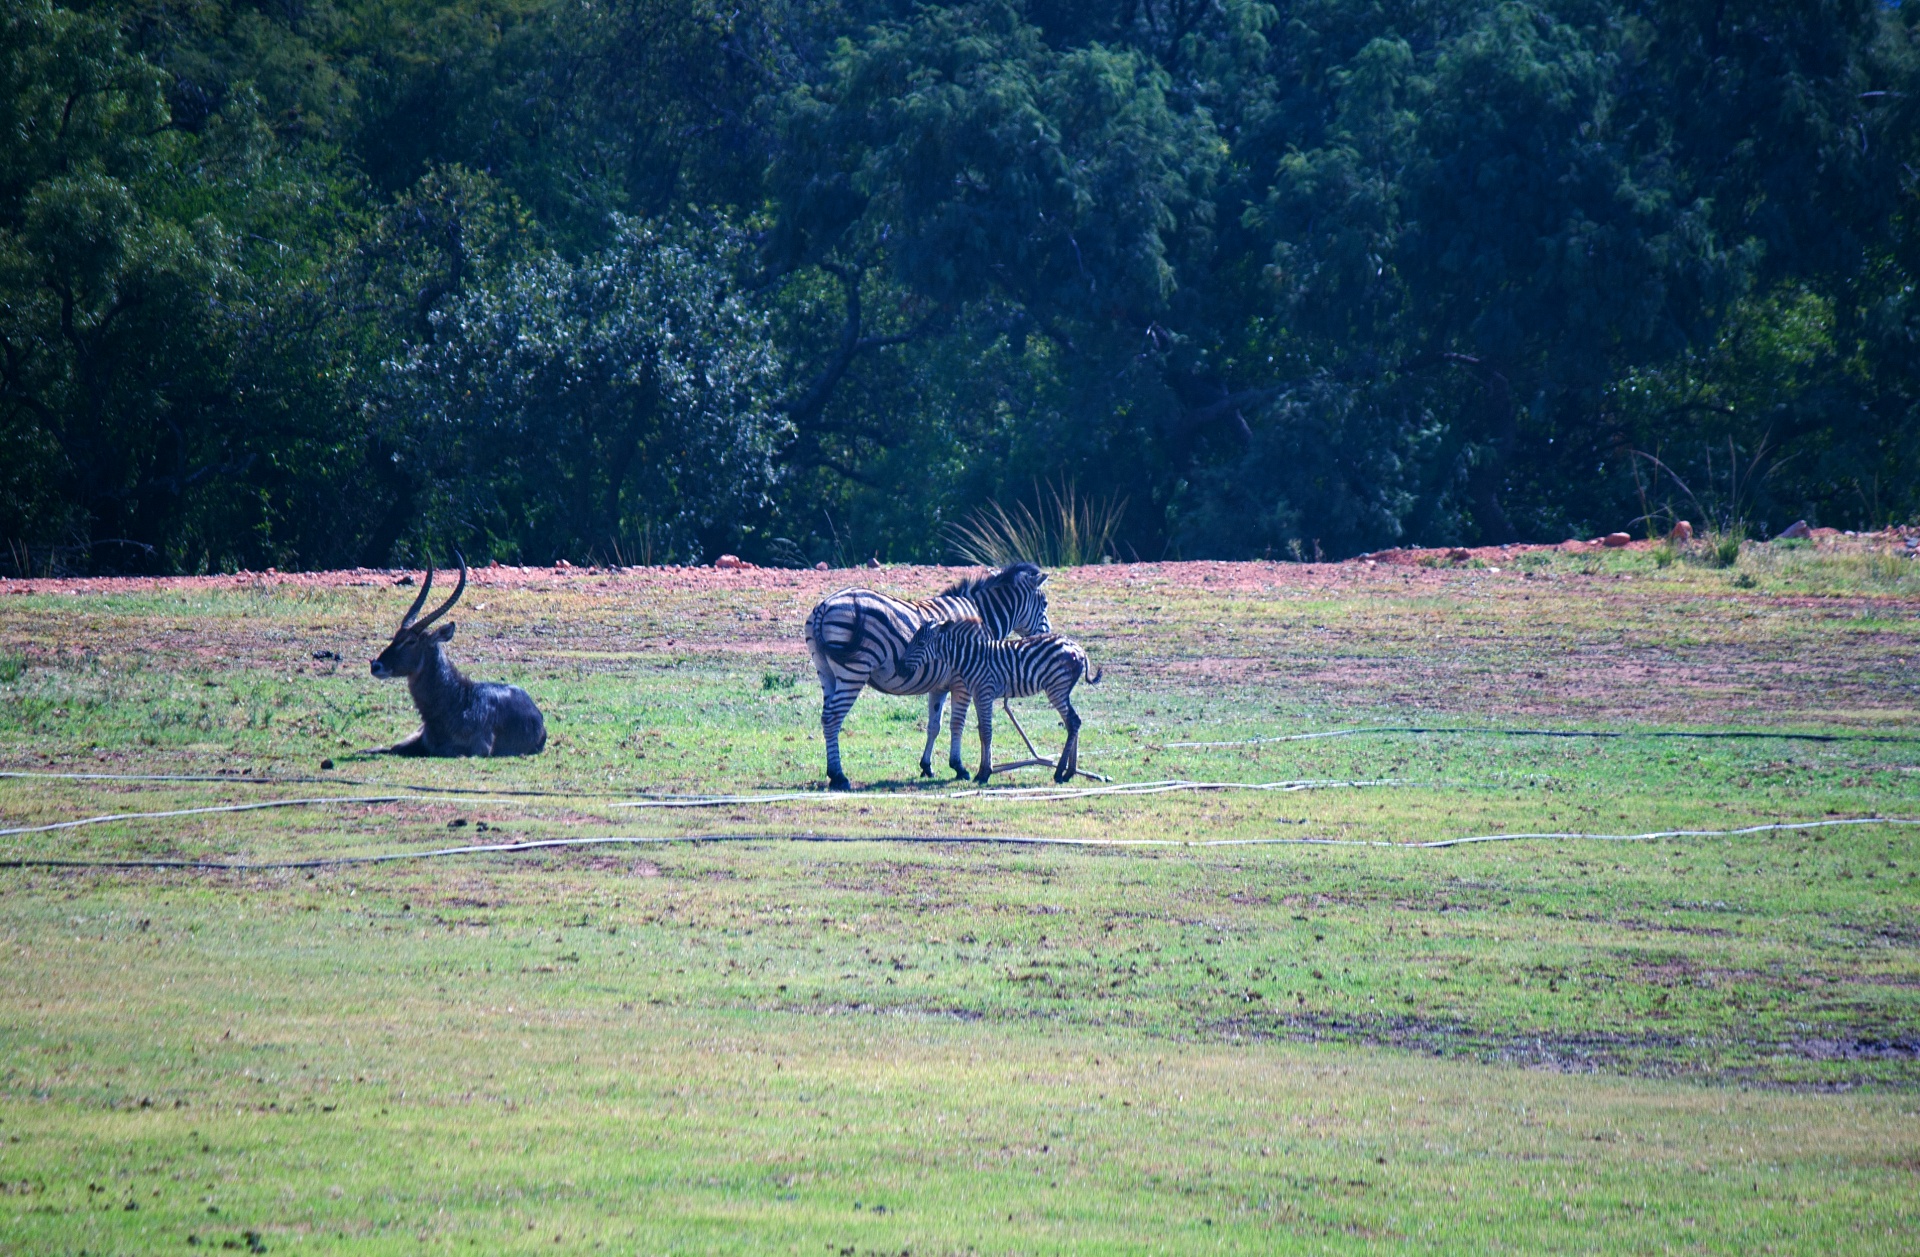 Water Buck And Zebra On Flat Field